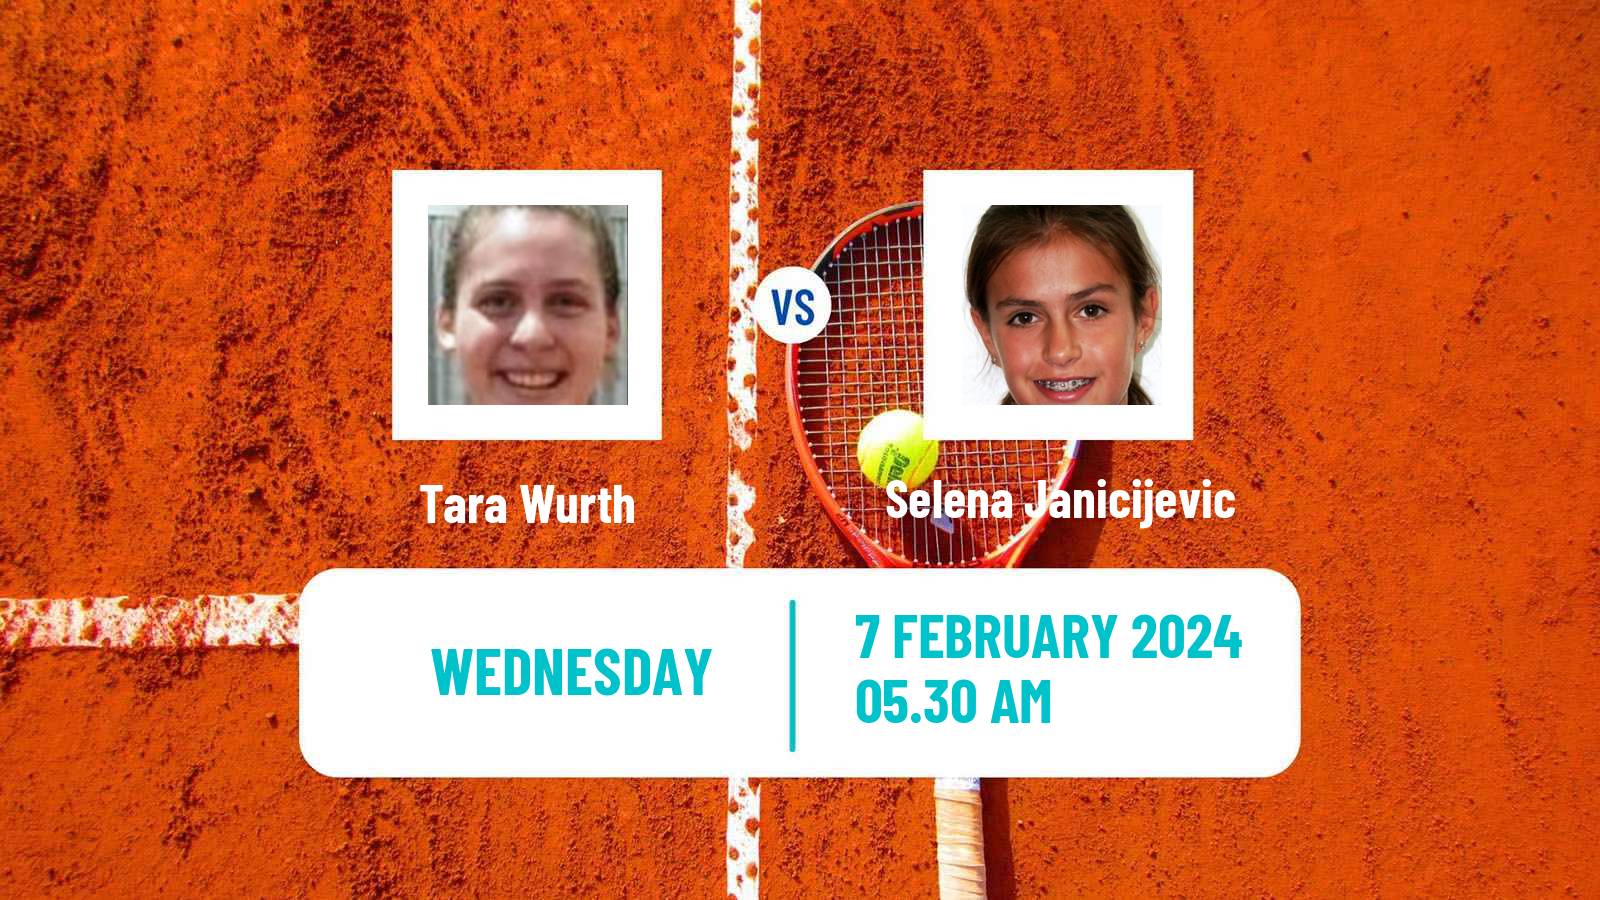 Tennis ITF W35 Antalya 2 Women Tara Wurth - Selena Janicijevic